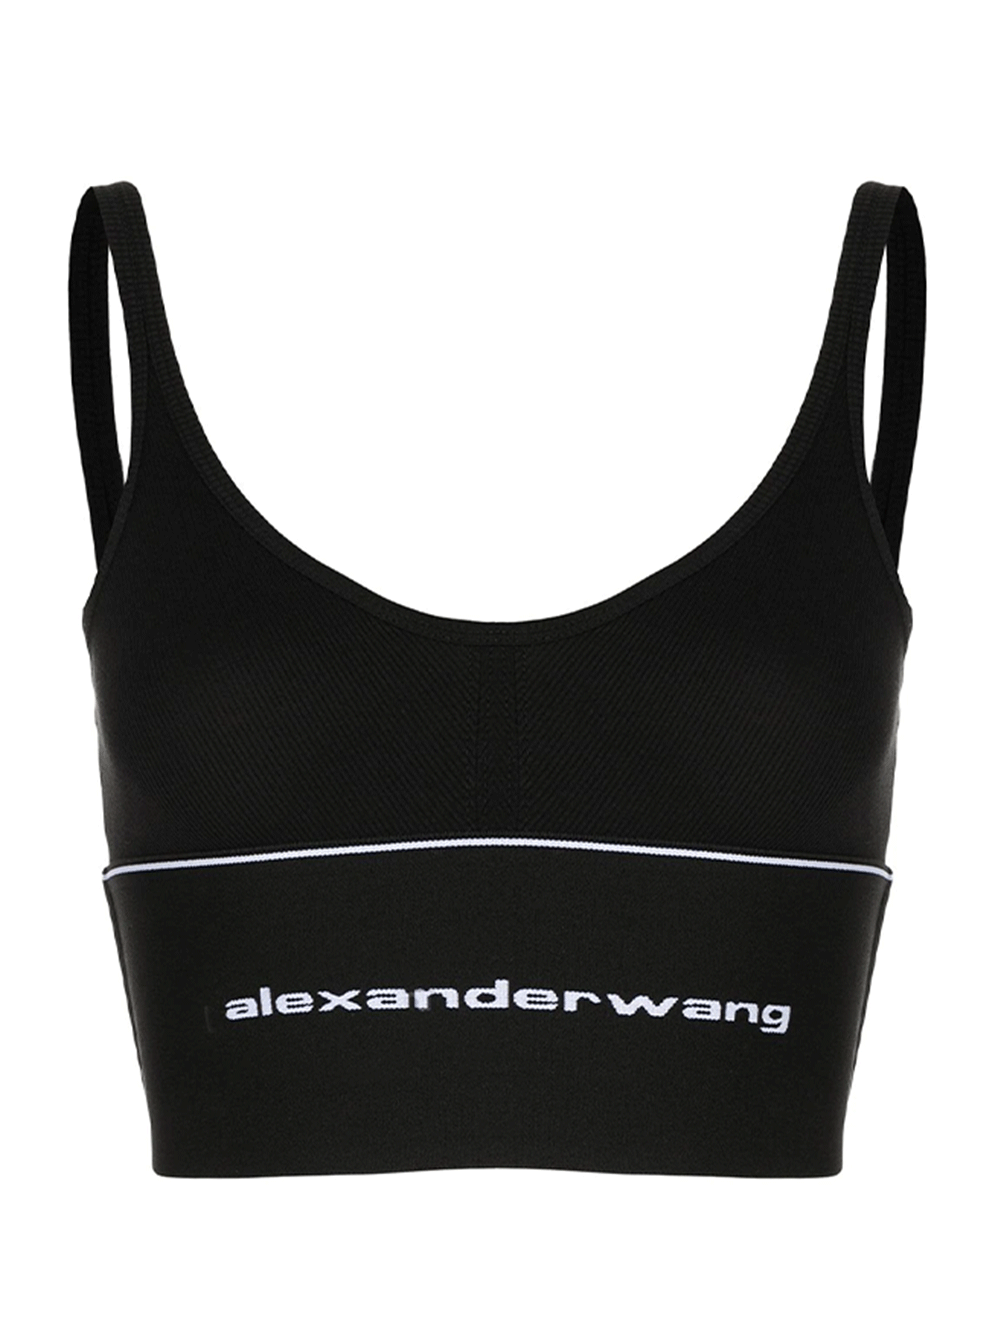 alexander wang alexanderwang DENIM BRA TOP BLACK - Alexander Wang